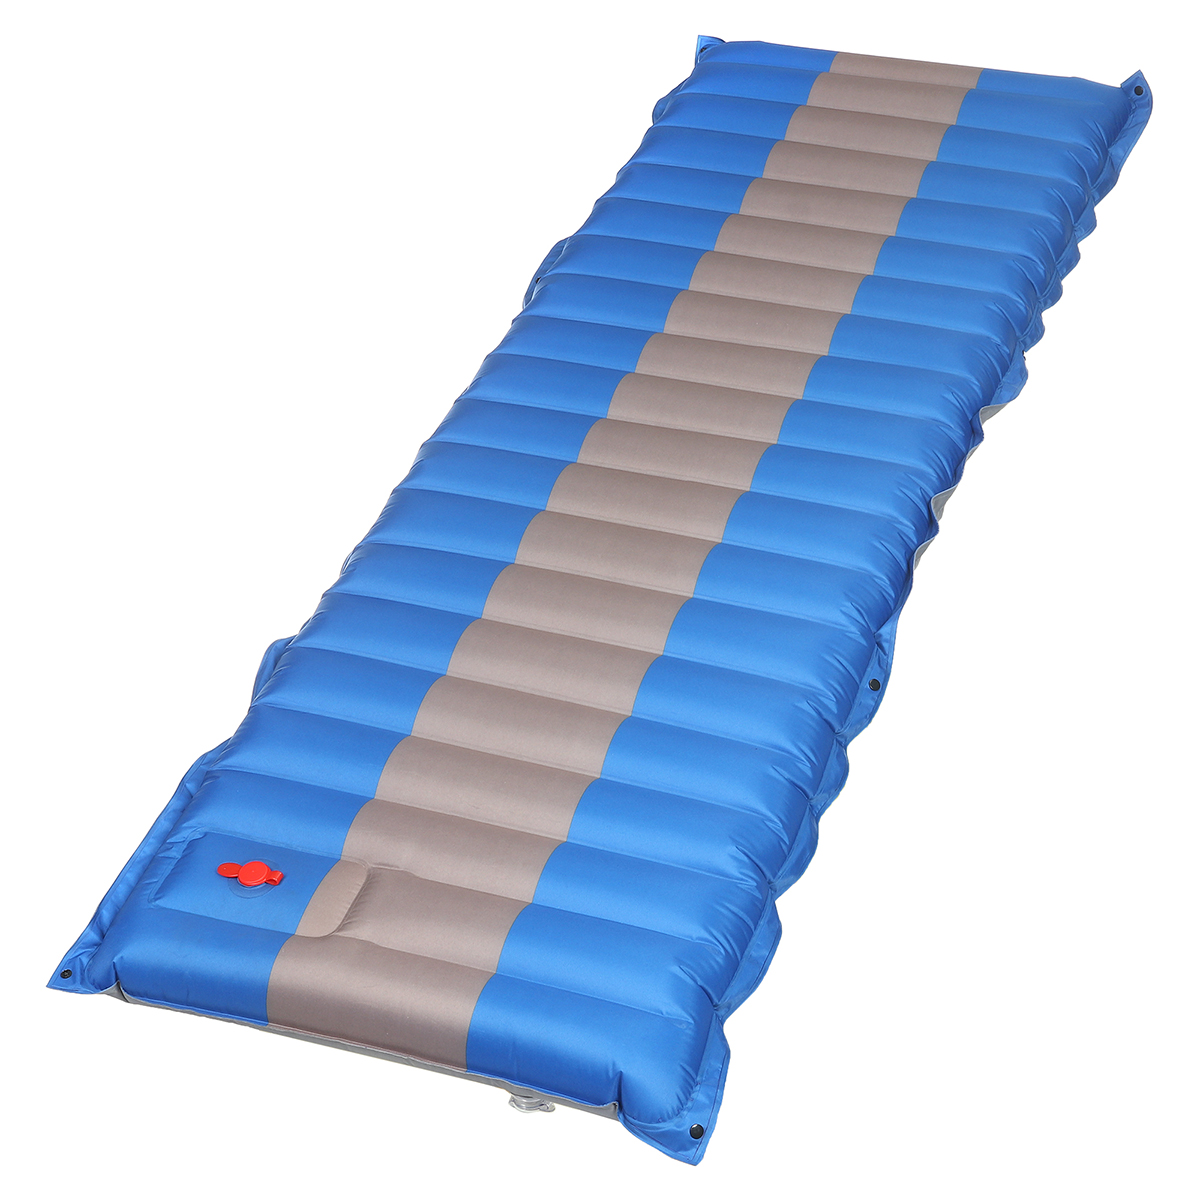 SGODDE-Inflating-Sleeping-Pad-Folding-Portable-Waterproof-Spliceable-Air-Mattress-Camping-Travel-Bea-1878547-9